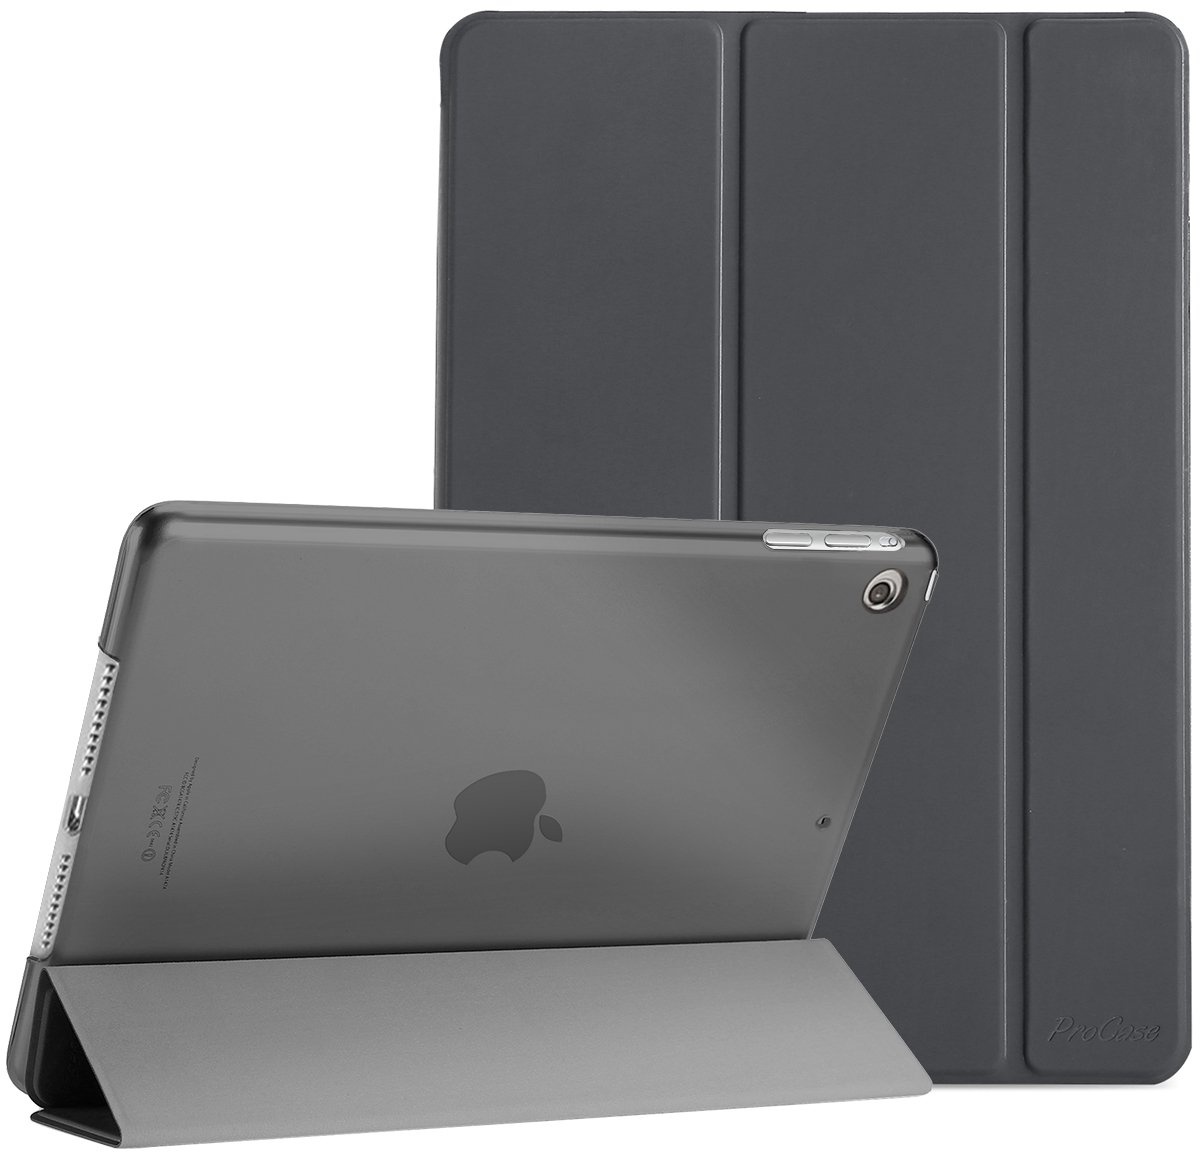 ProCase iPad Mini 1 Hülle, iPad Mini 2 Hülle, iPad Mini 3 Hülle - Ultra Slim Leichter Standcase mit Translucent Frosted Back Smart Cover für 7.9" Apple iPad Mini 1, Mini 2, Mini 3 –Grau